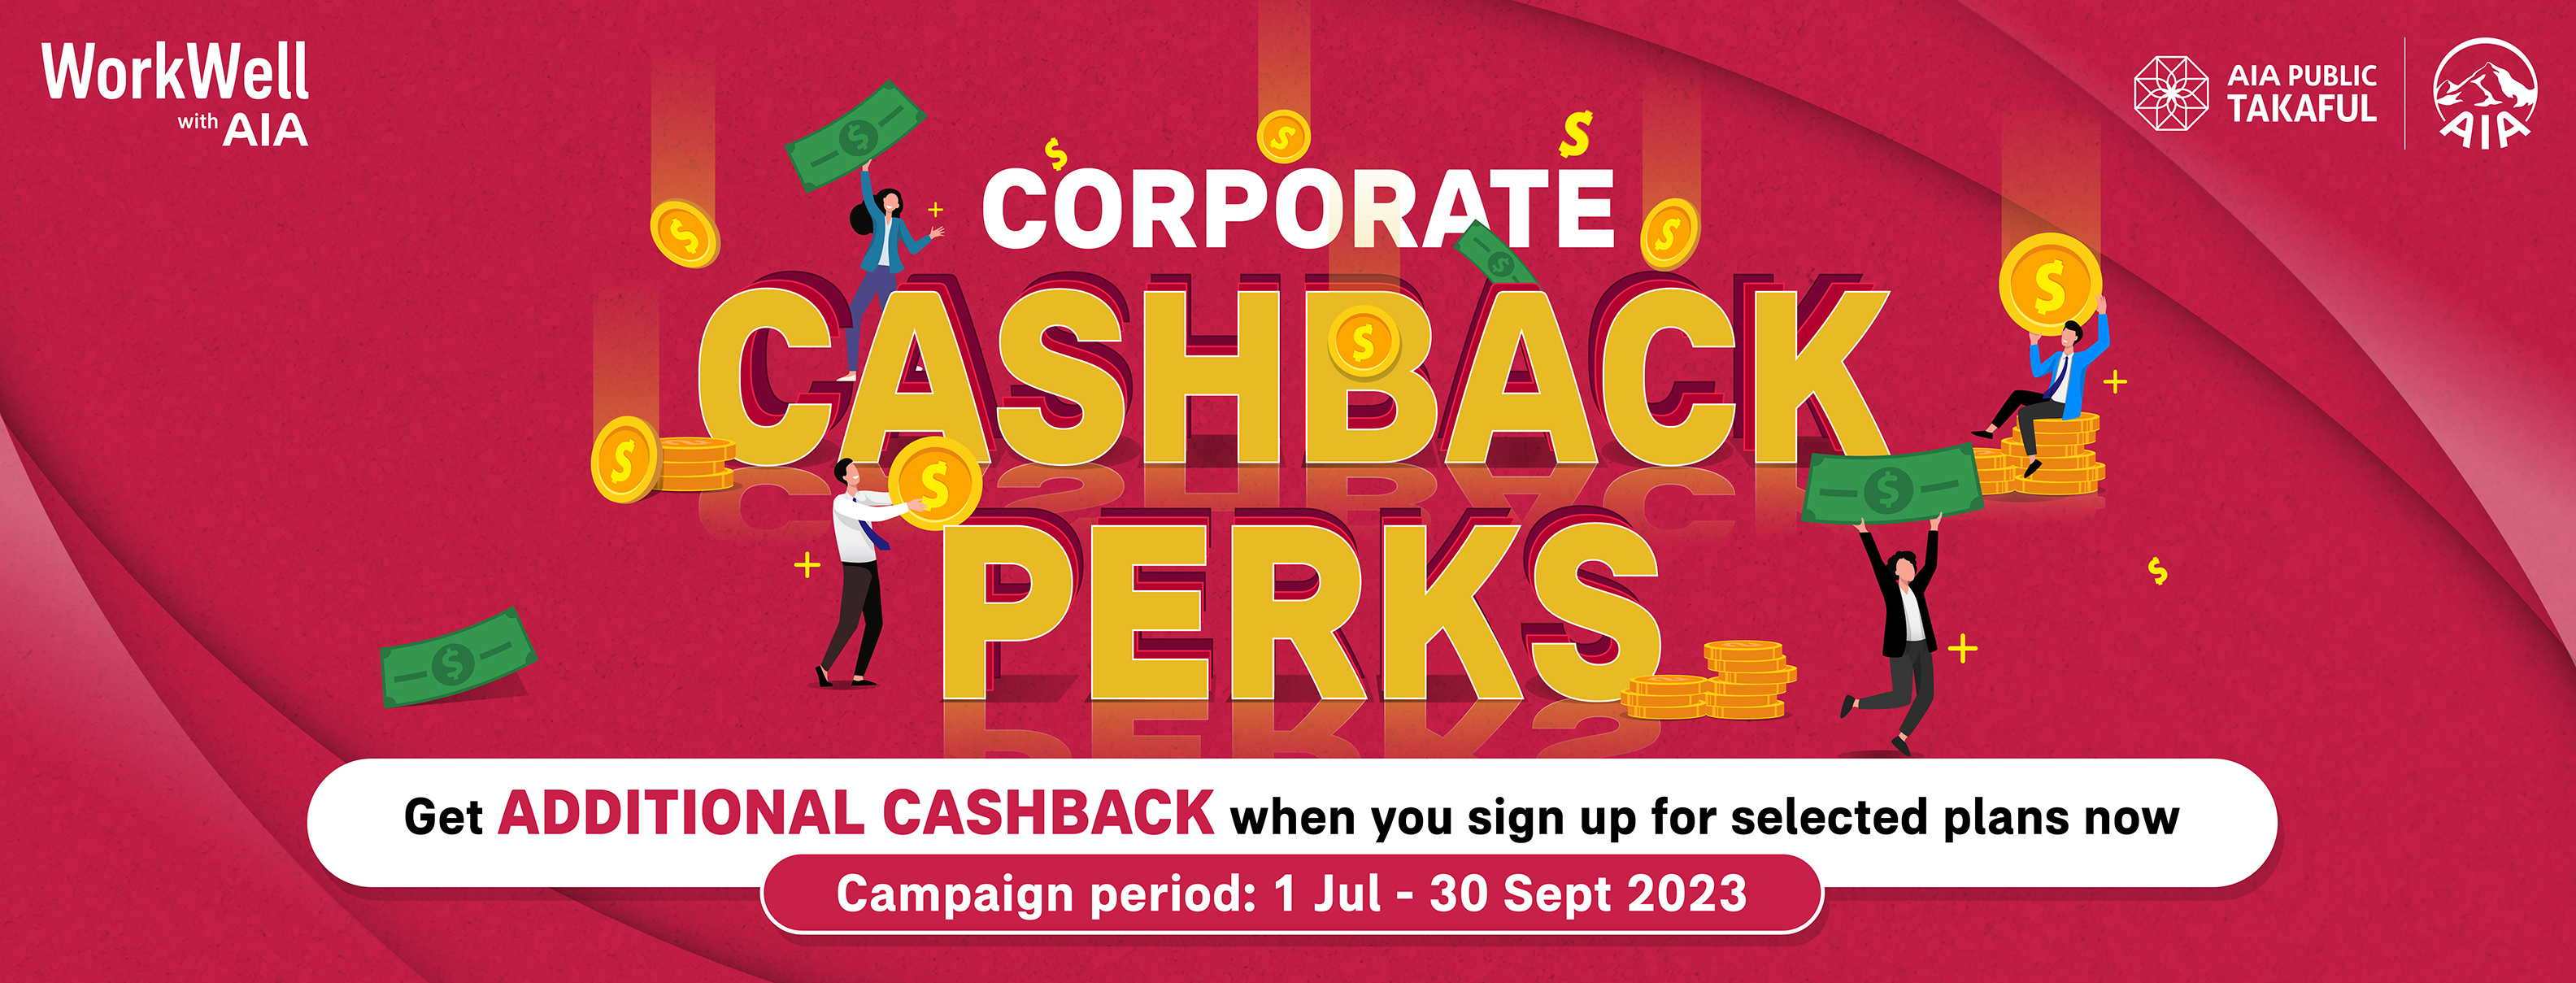 Corporate Cashback Perks